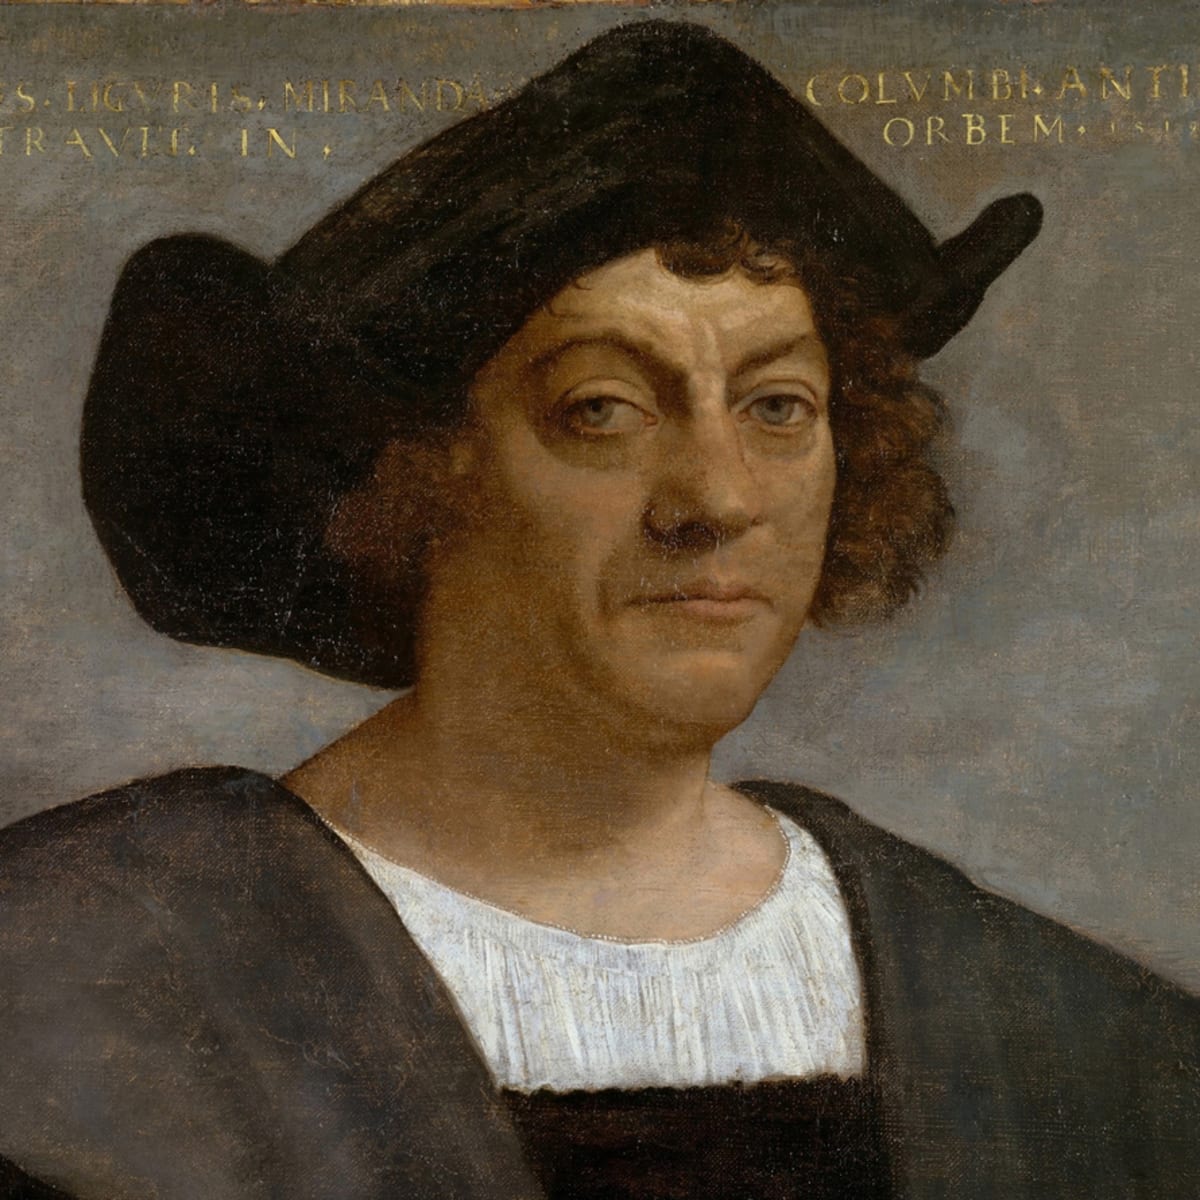 Christopher Columbus image